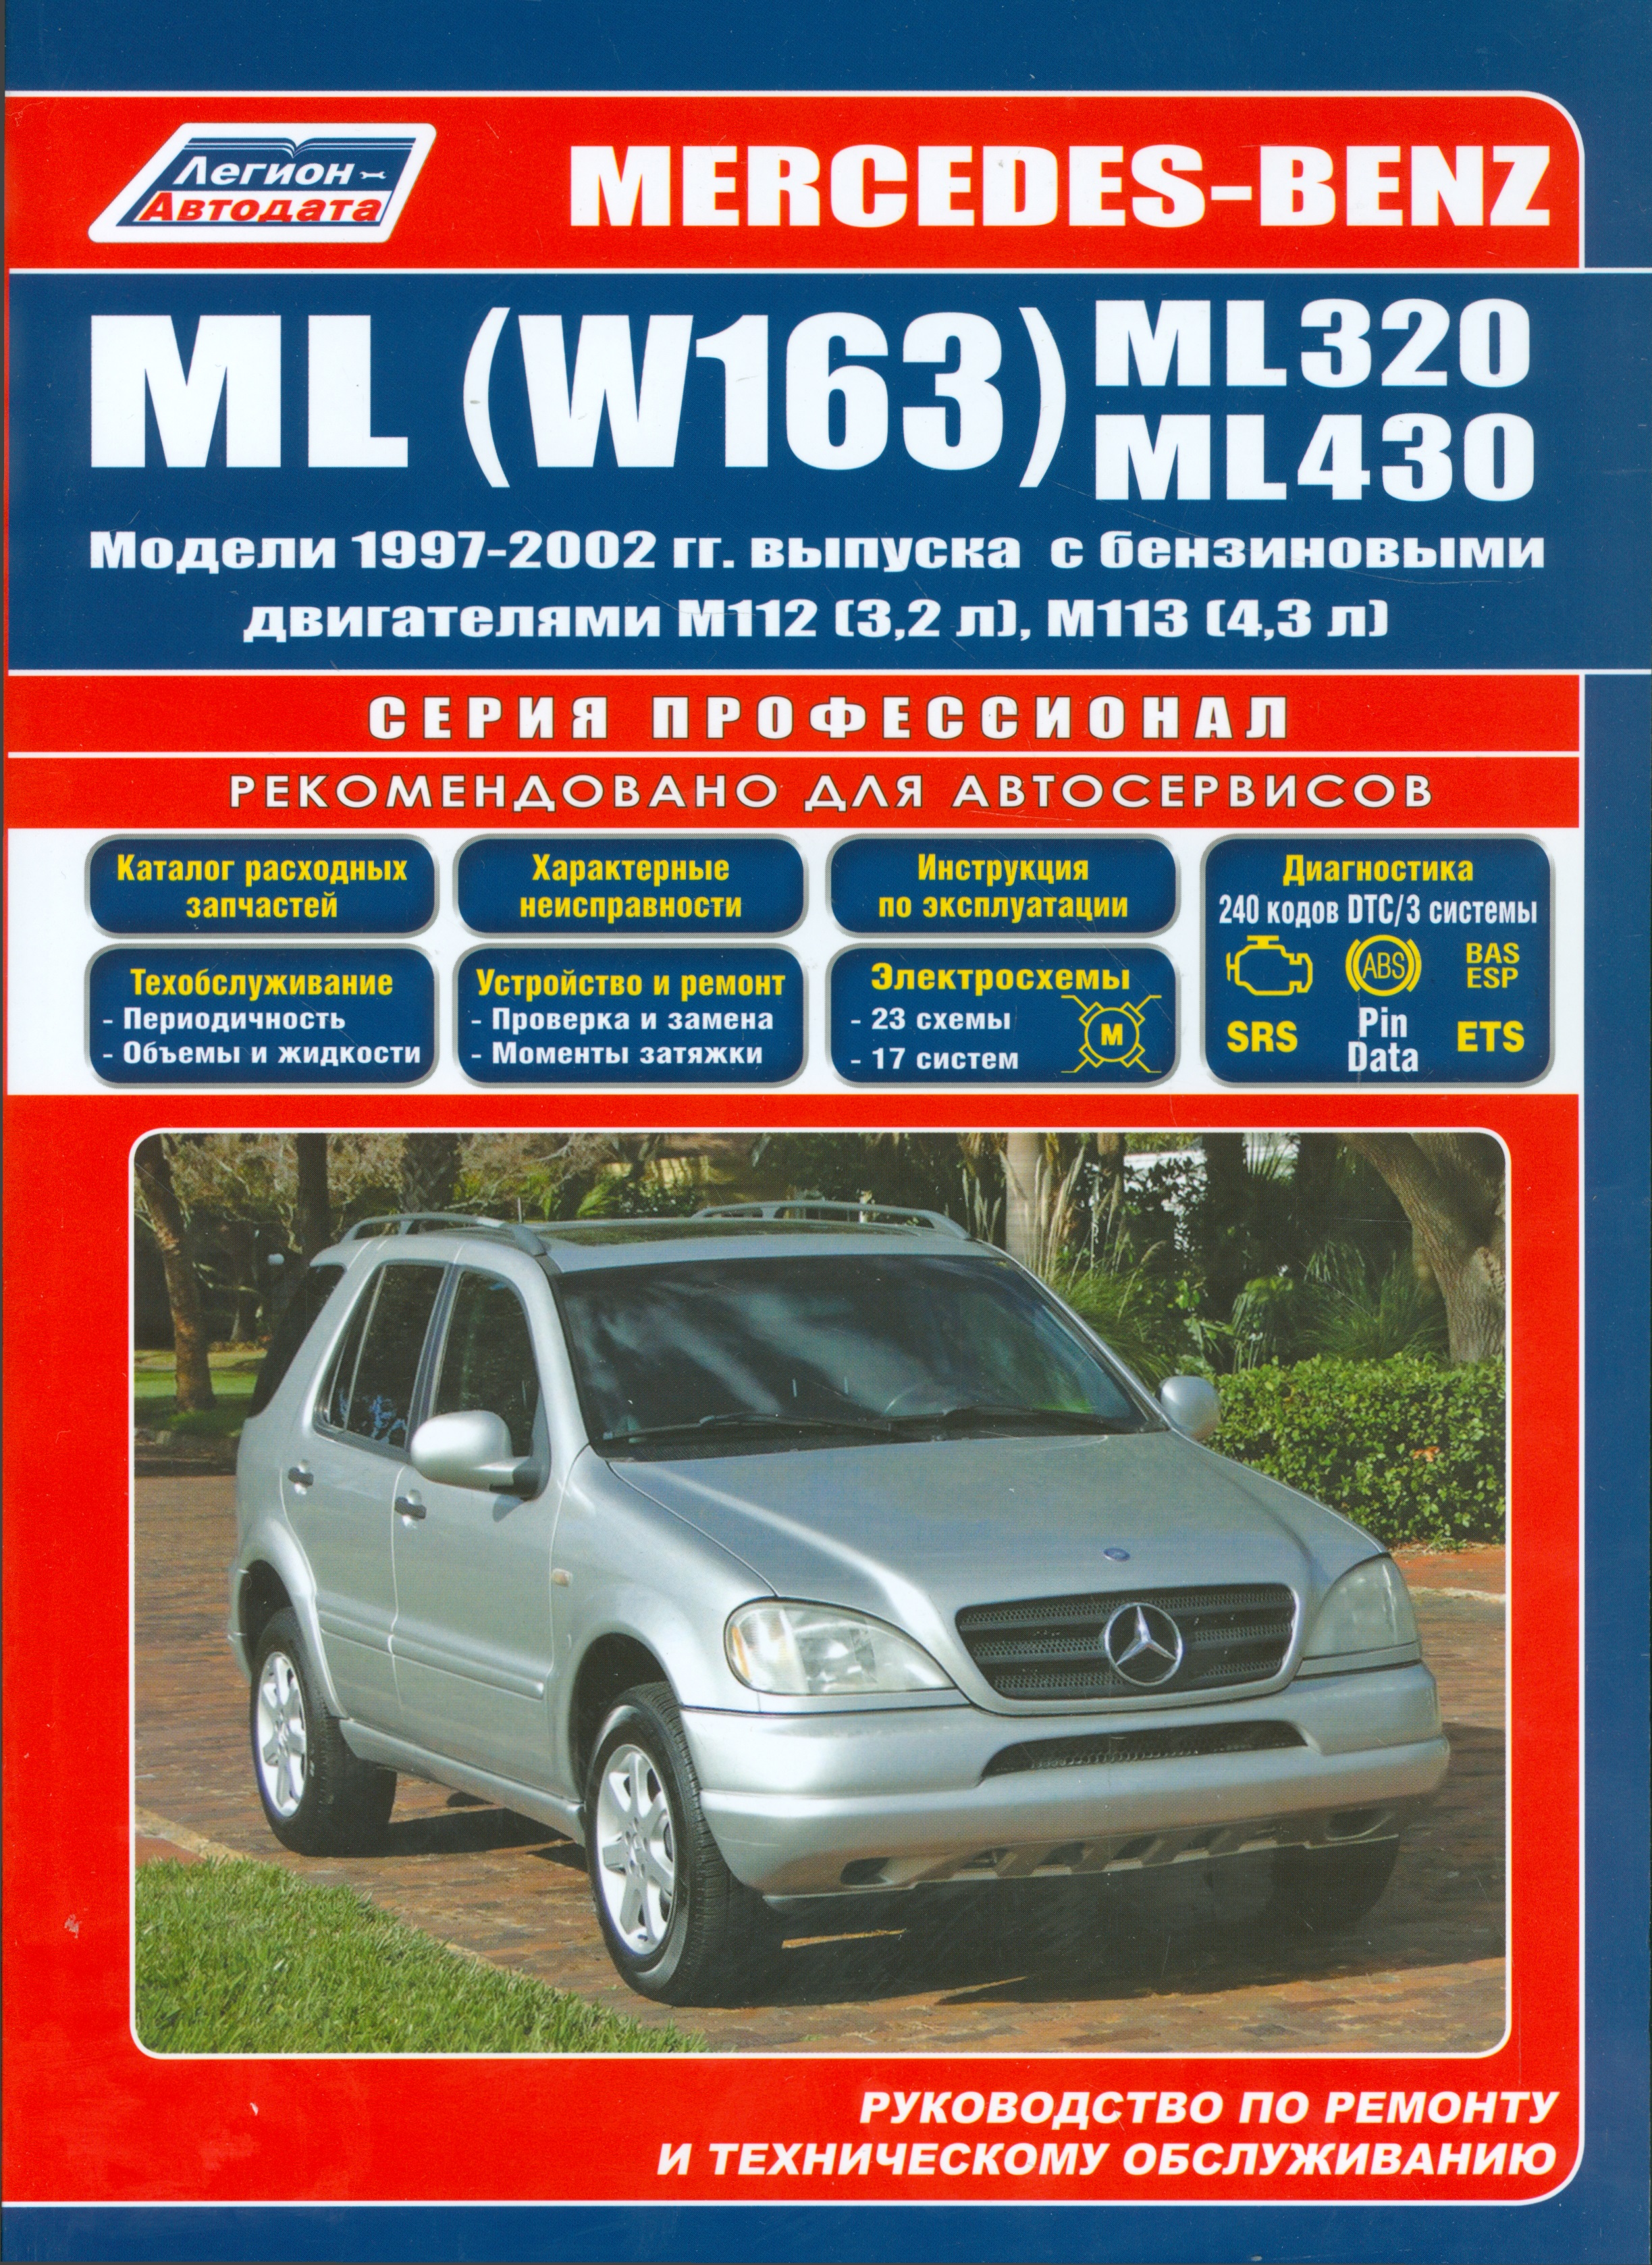 Mercedes-Benz ML (W163) ML320 ML430 Мод. 1997-2002 гг. вып. С бенз. (мПрофессионал) датчик абс mercedes m class ml55 ml230 ml270 ml320 ml400 ml430 ml500 delphi арт ss20342